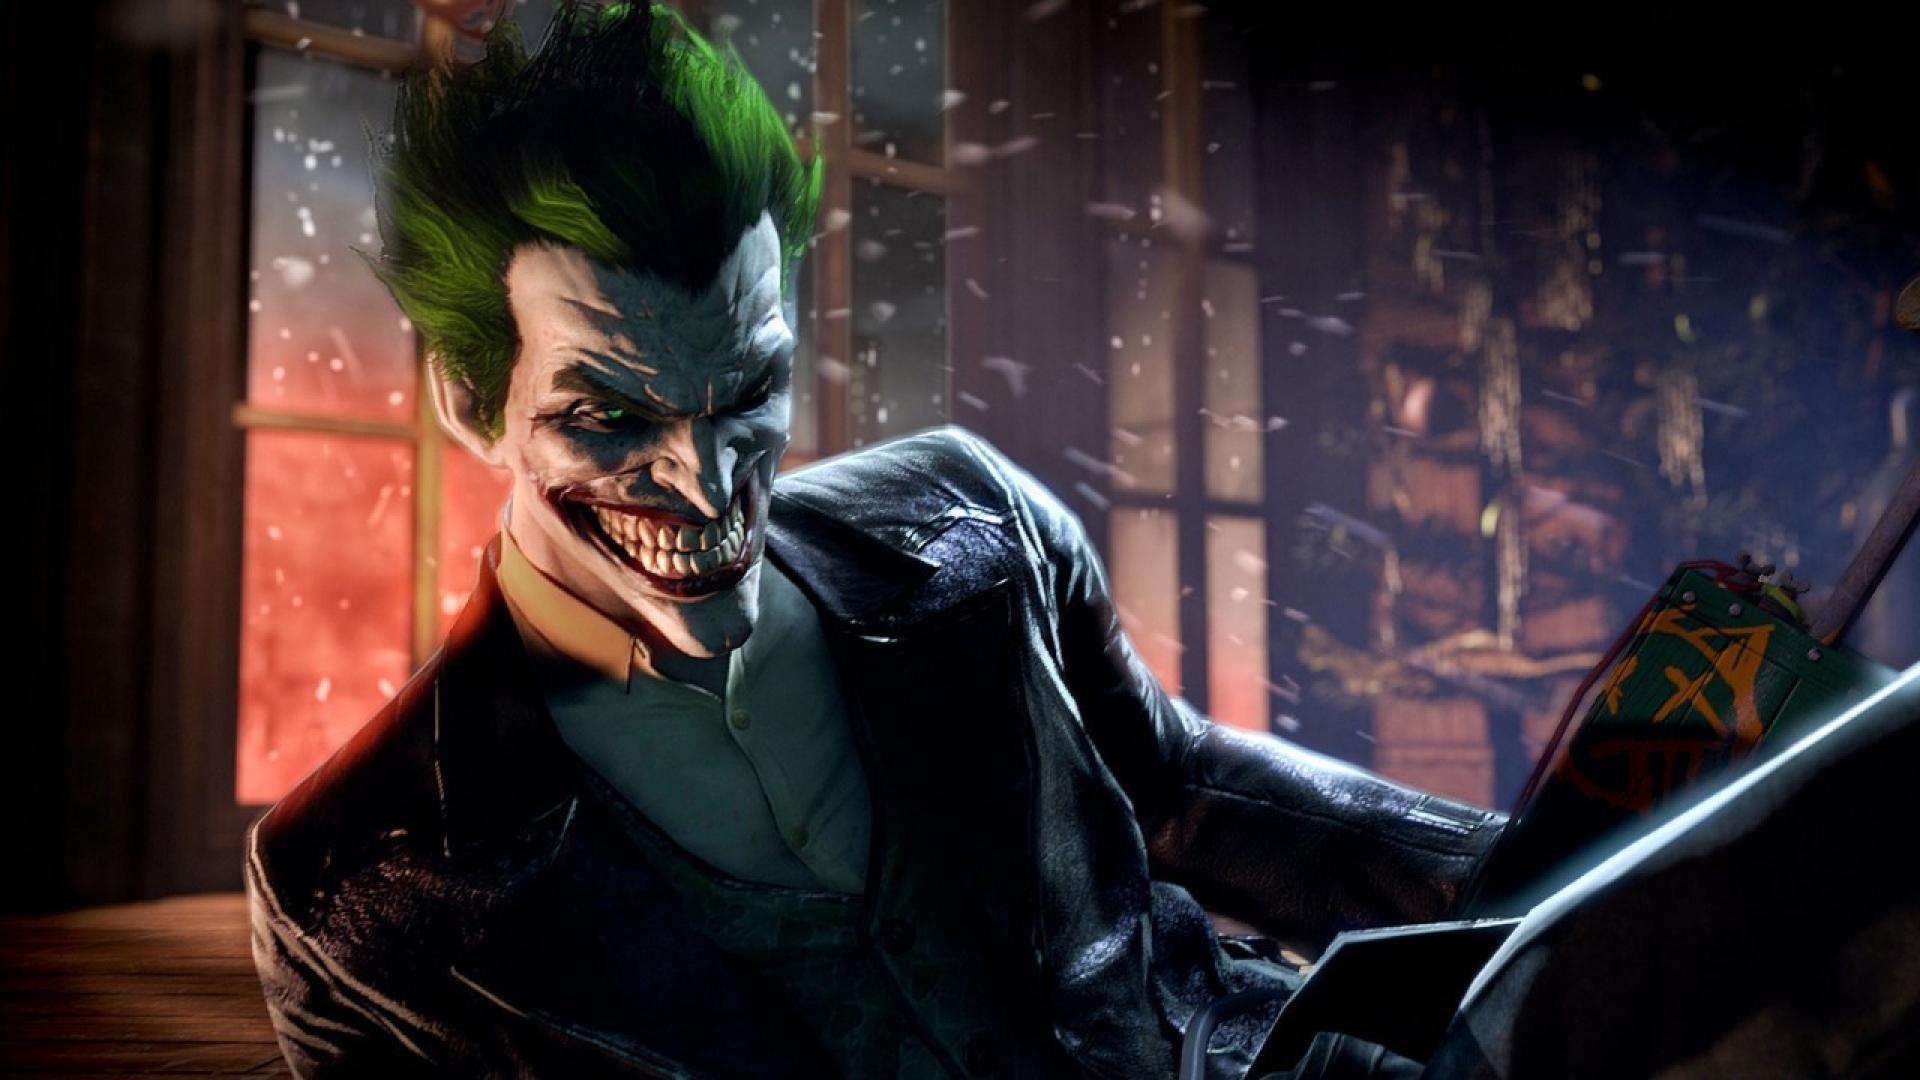 The joker batman arkham origins wallpapers